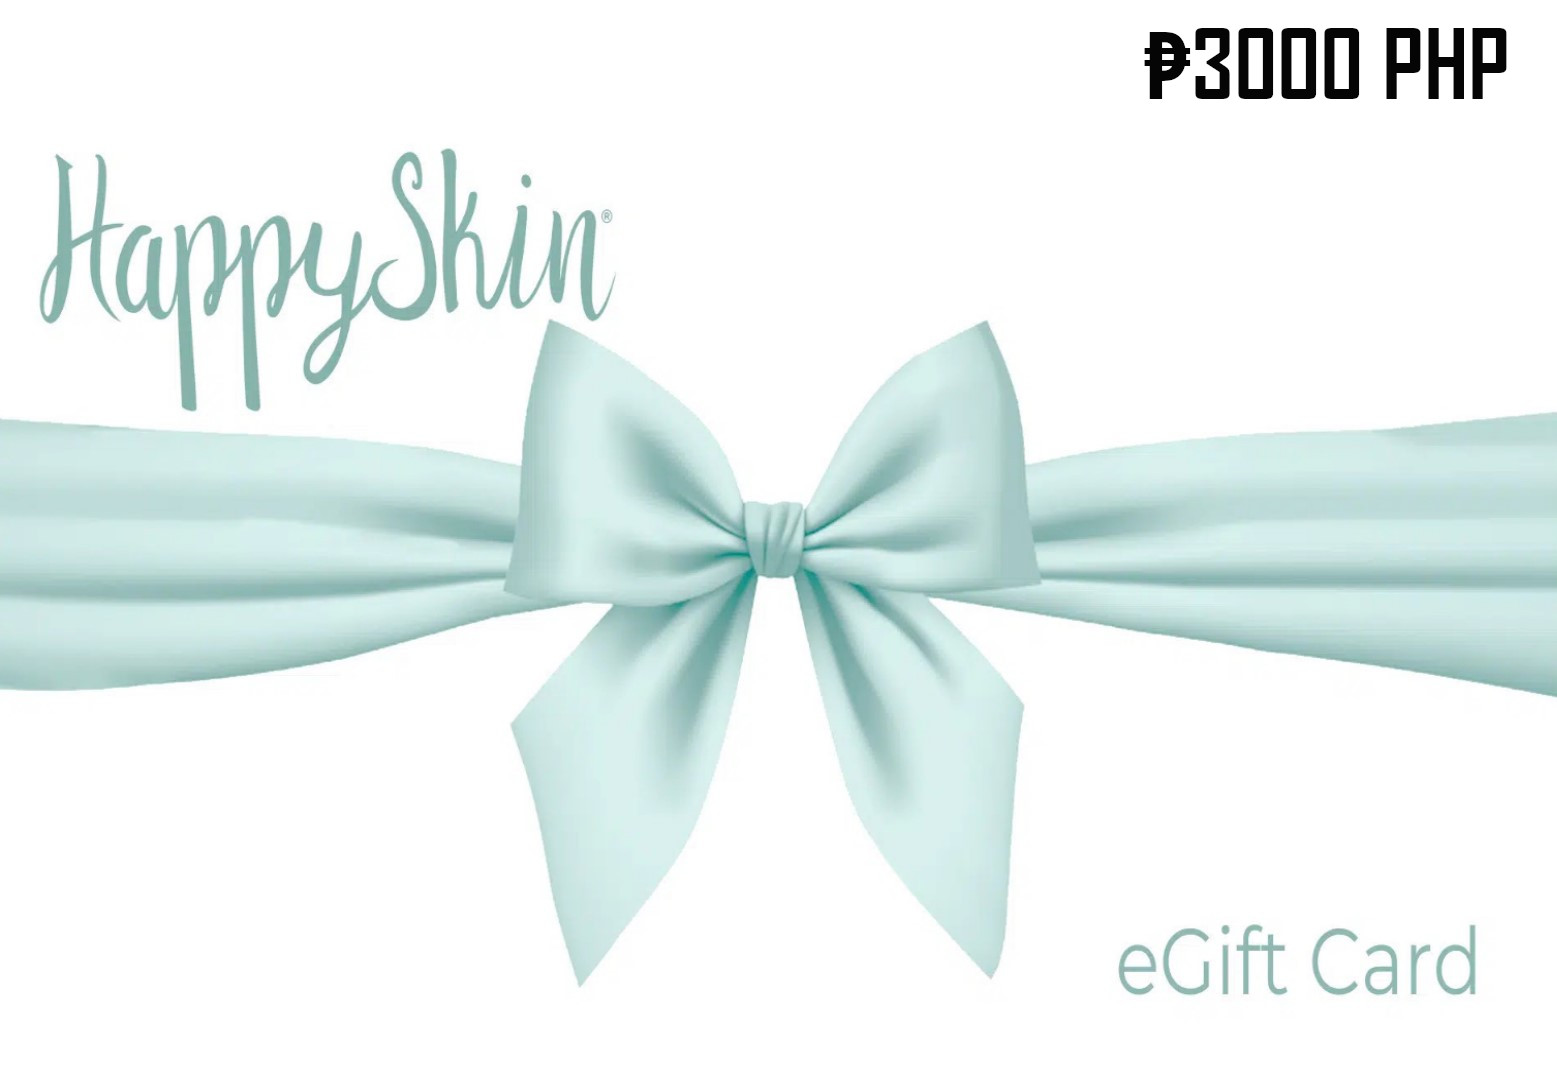 Happy Skin ₱3000 PH Gift Card, 62.52$